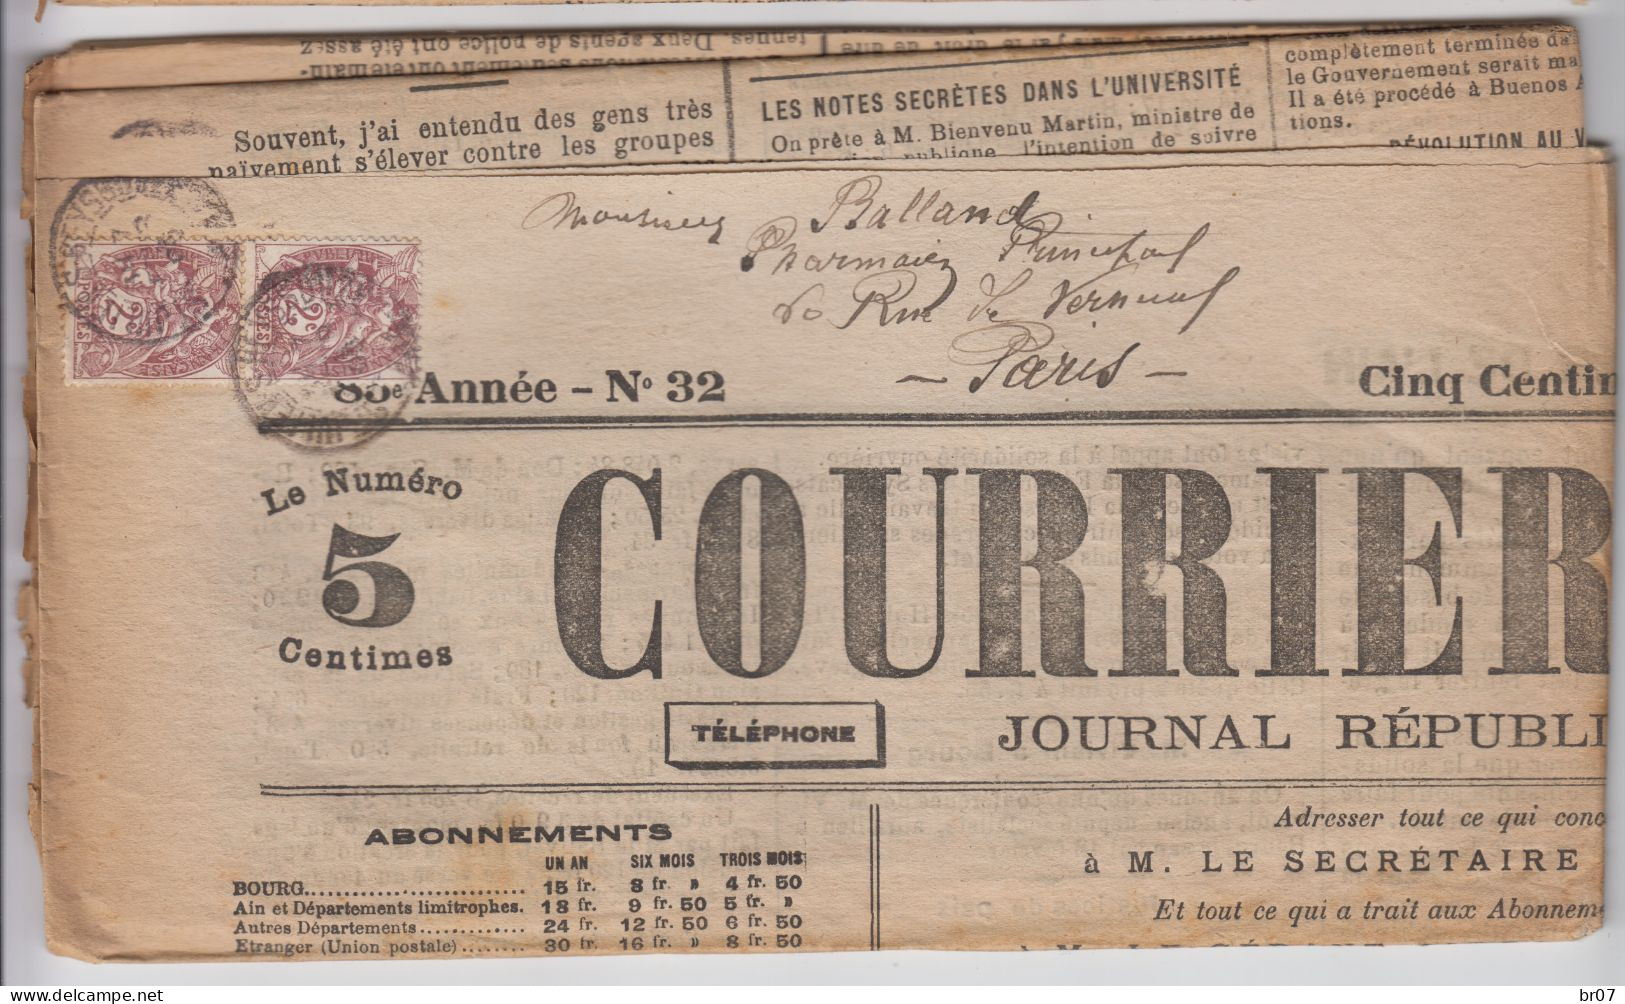 AIN JOURNAL SAMEDI 11 FEVRIER 1905 COURRIER DE L'AIN TARIF 4C TYPE BLANC N°108 X 2 OBLIT T84 ST JULIEN DE REYSSOUZE - Kranten